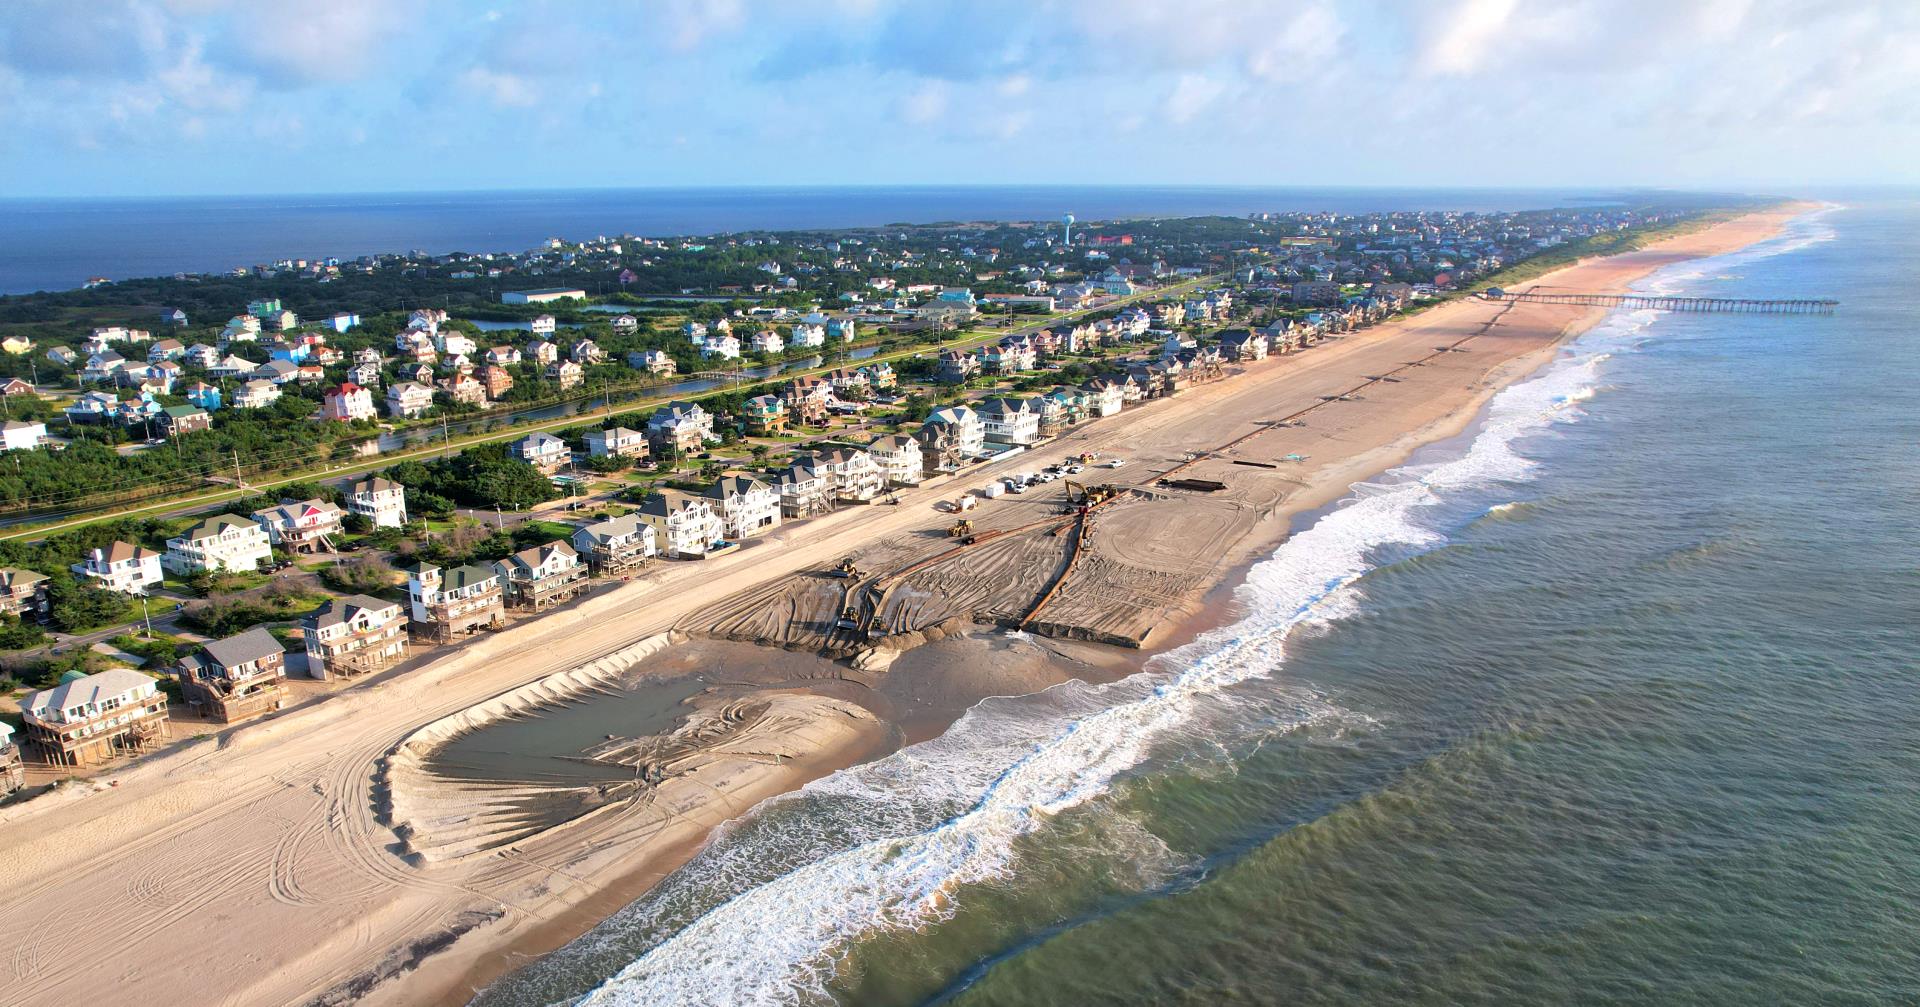 Aerial image of the Avon beach nourishment progress, nearing completion.